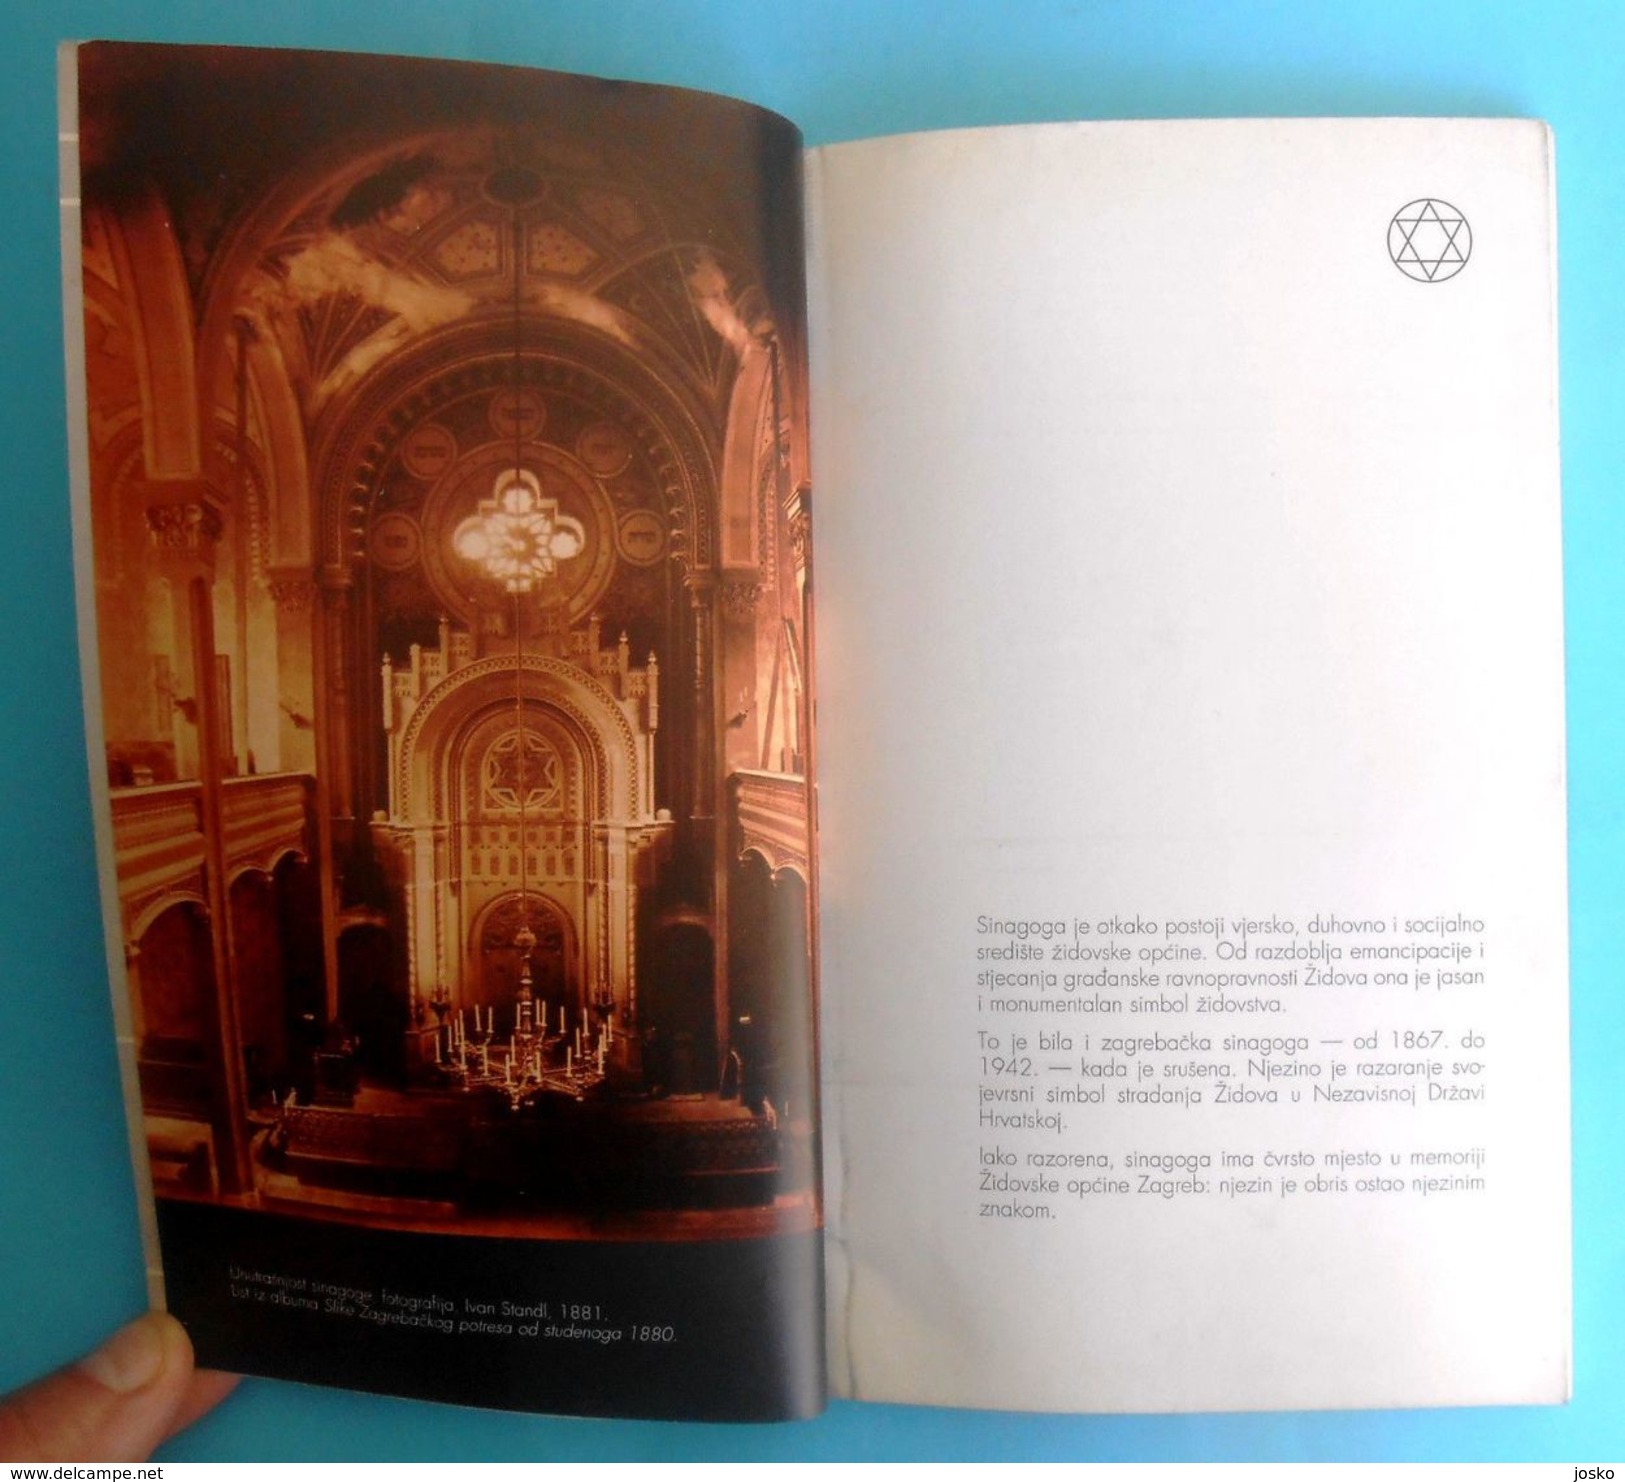 WW2 - JUDAISM - ZAGREBB SYNAGOGUE ... RELIQUIAE RELIQUIARUM Exhibition Catalog DESTROYED IN WW2 Jewish Judaica Holocaust - Religion & Esotericism